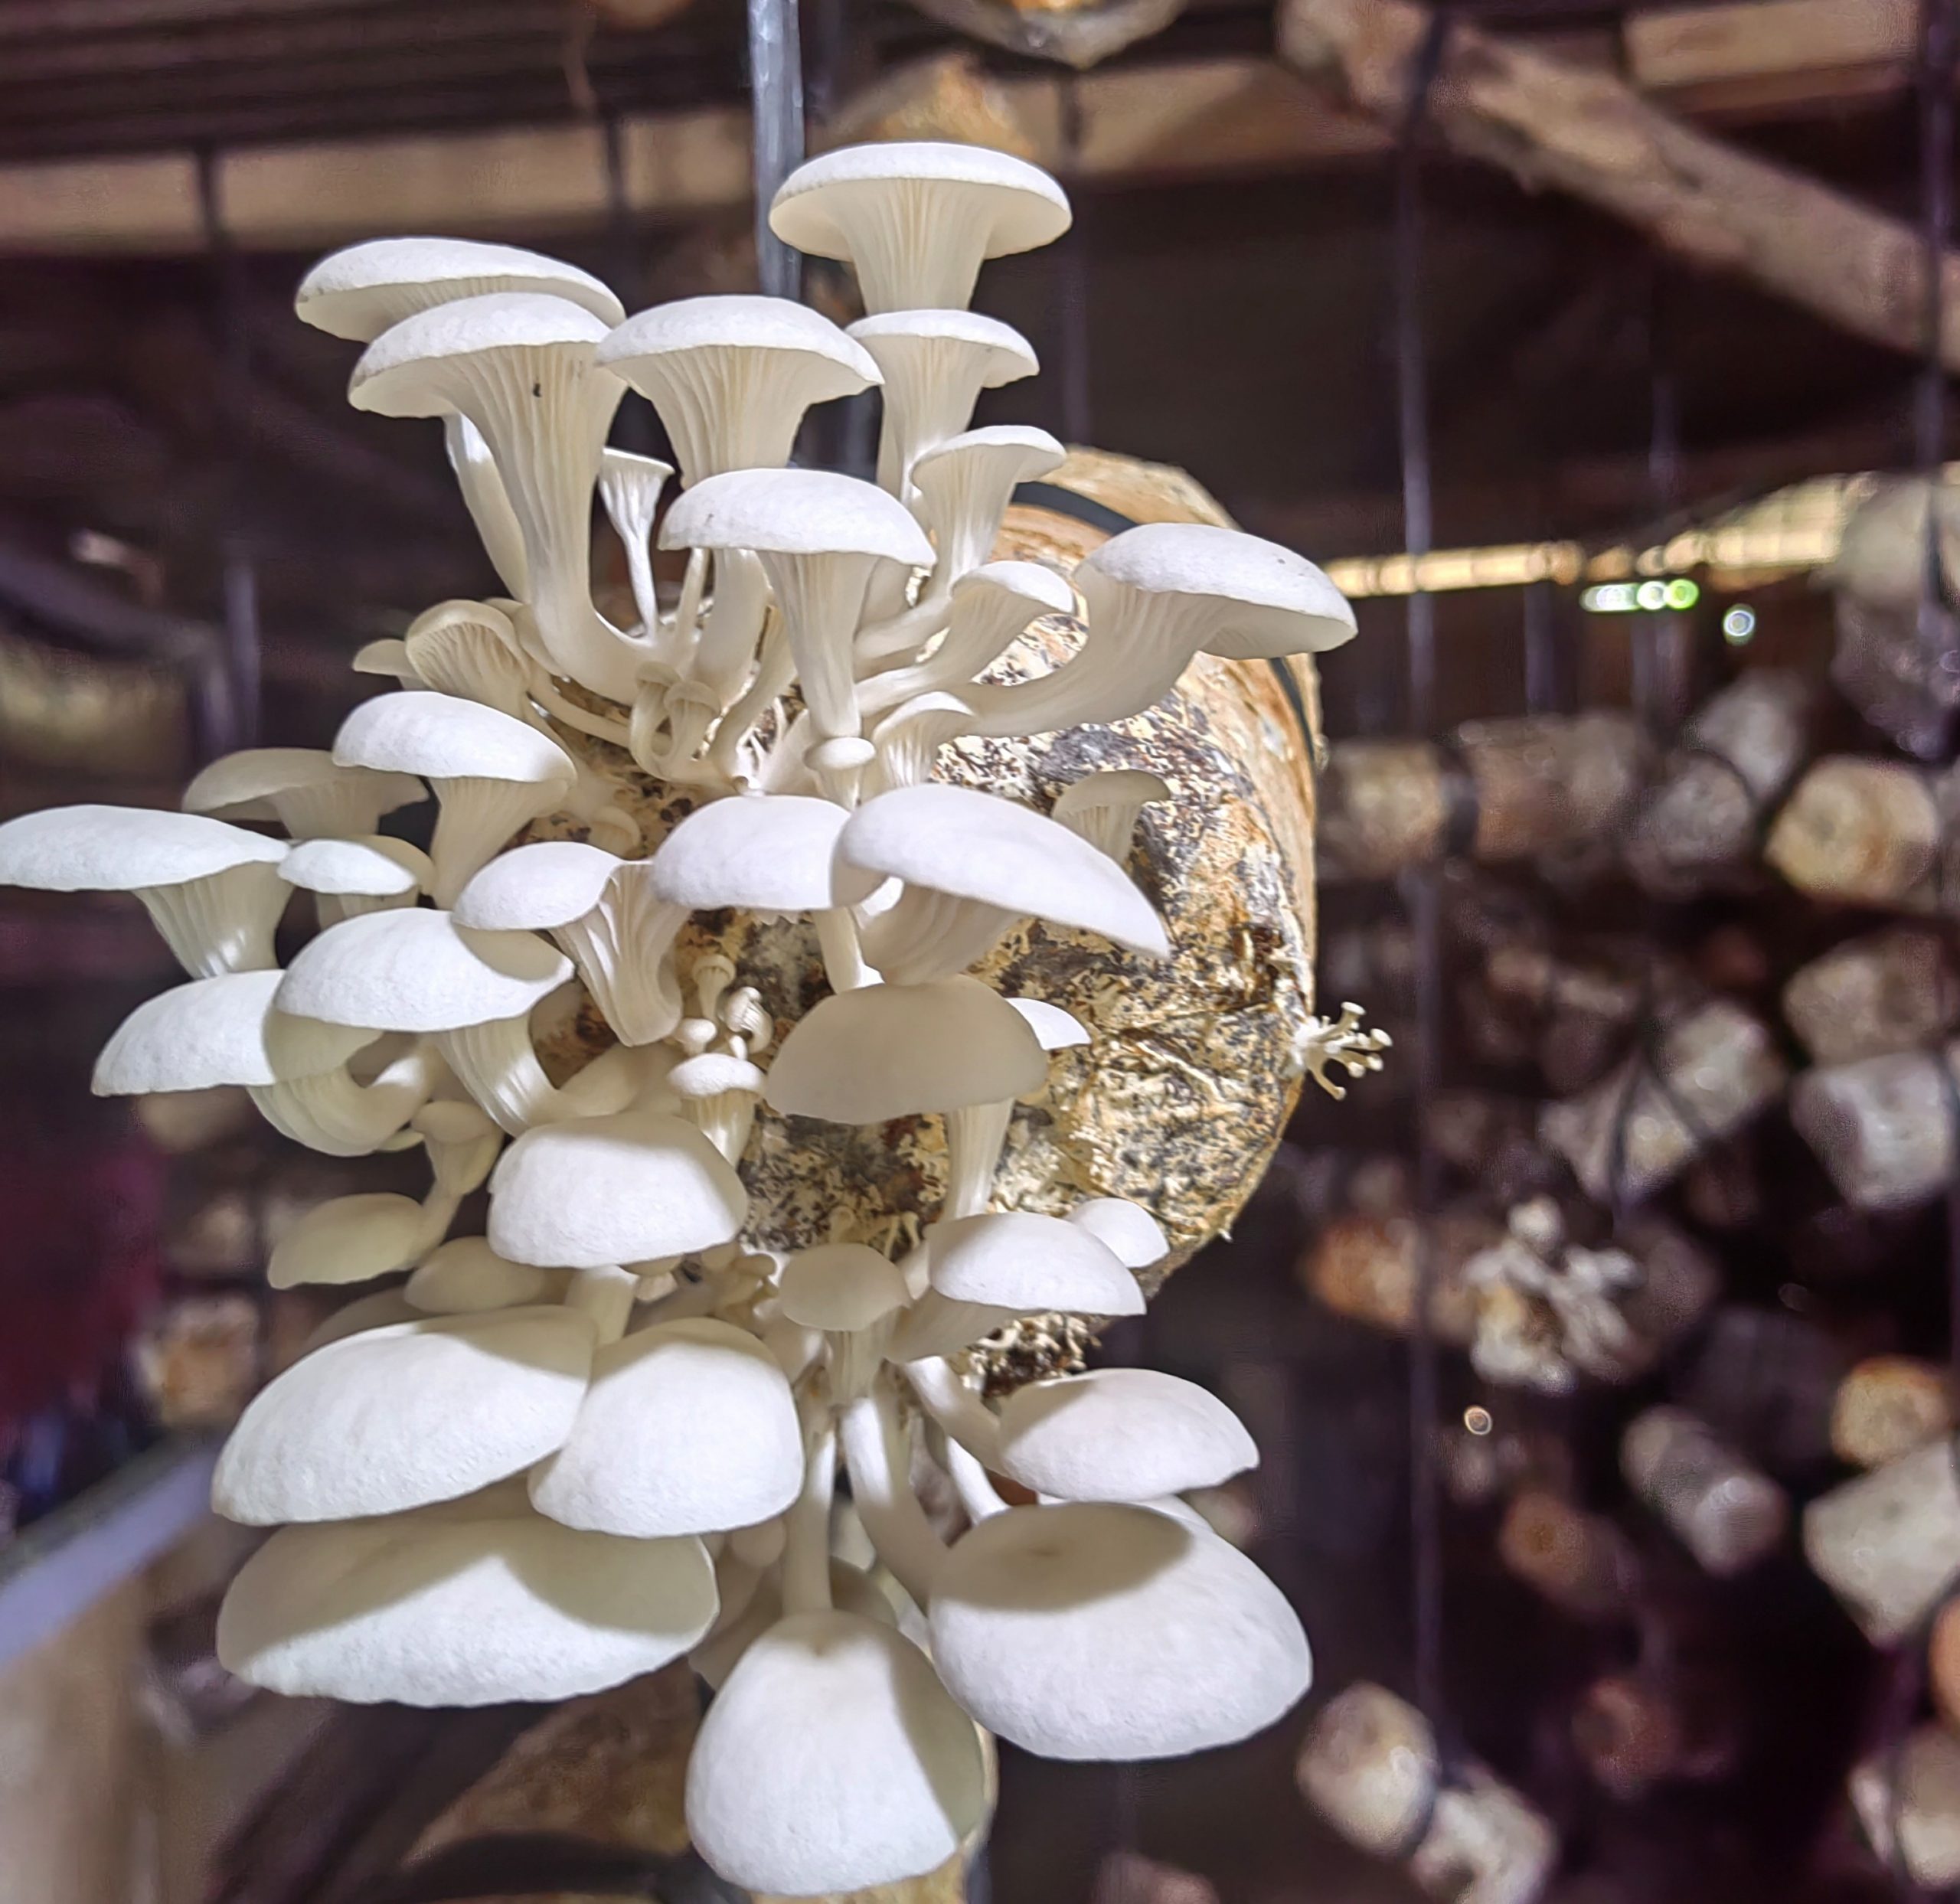 Mushroom industry boost for NegOcc thru Php 1.7M-worth SAAD support